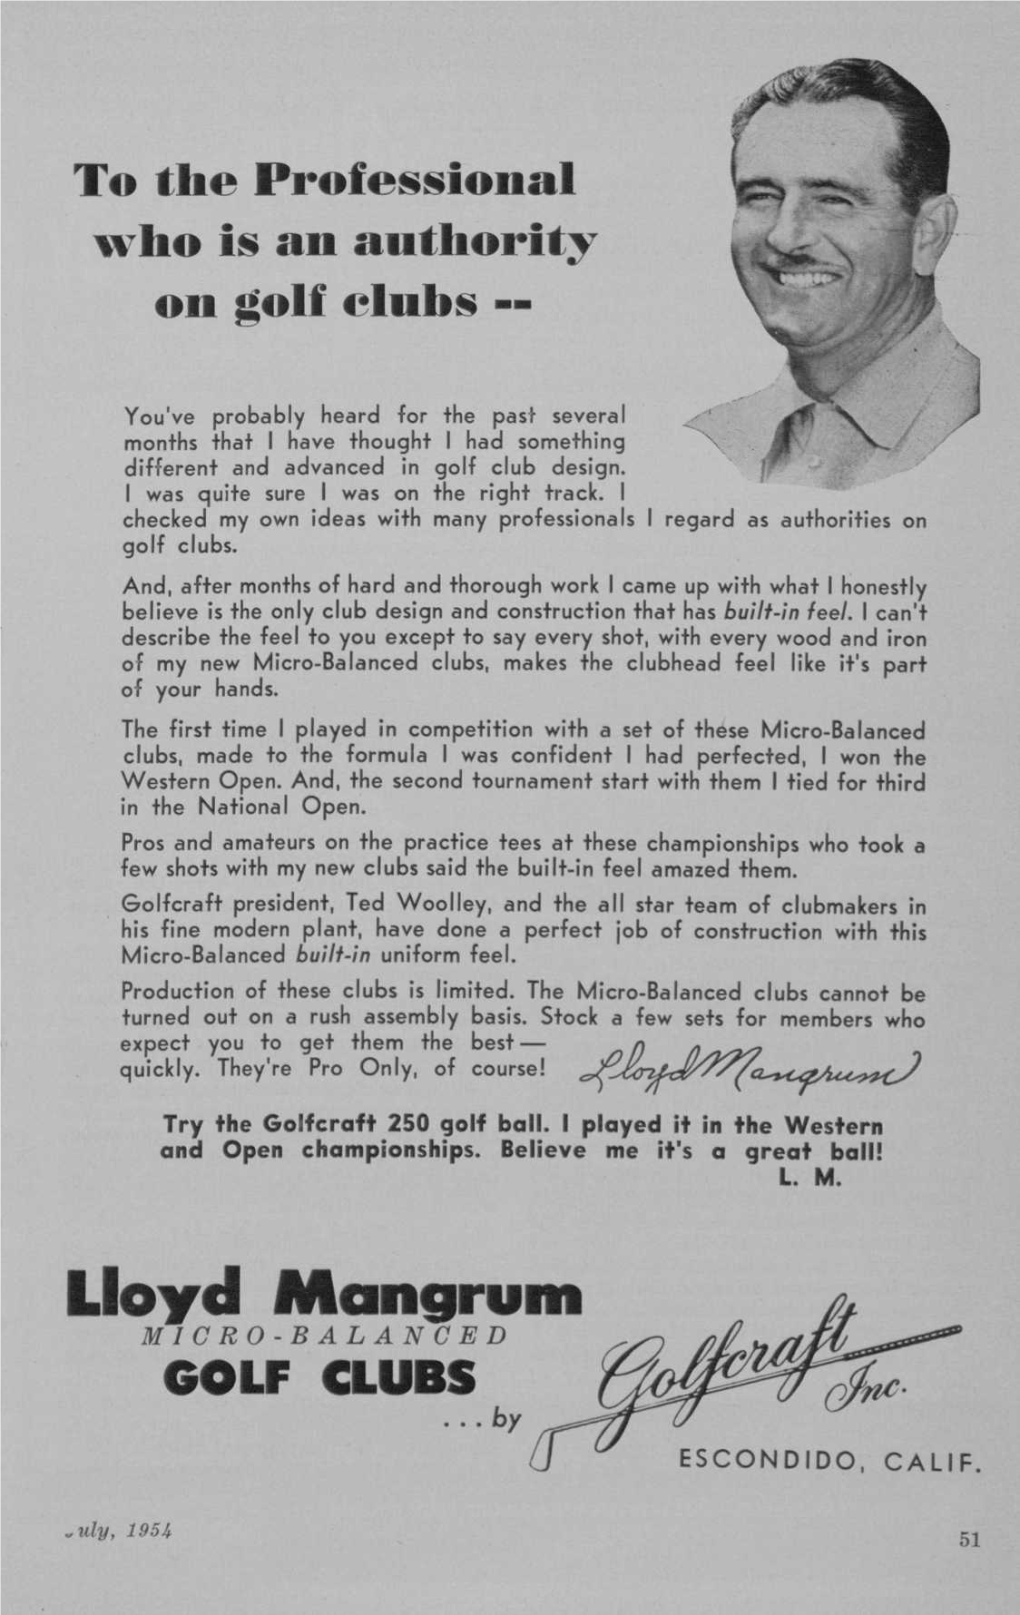 Lloyd Mangrum MICRO-BALANCED GOLF CLUBS